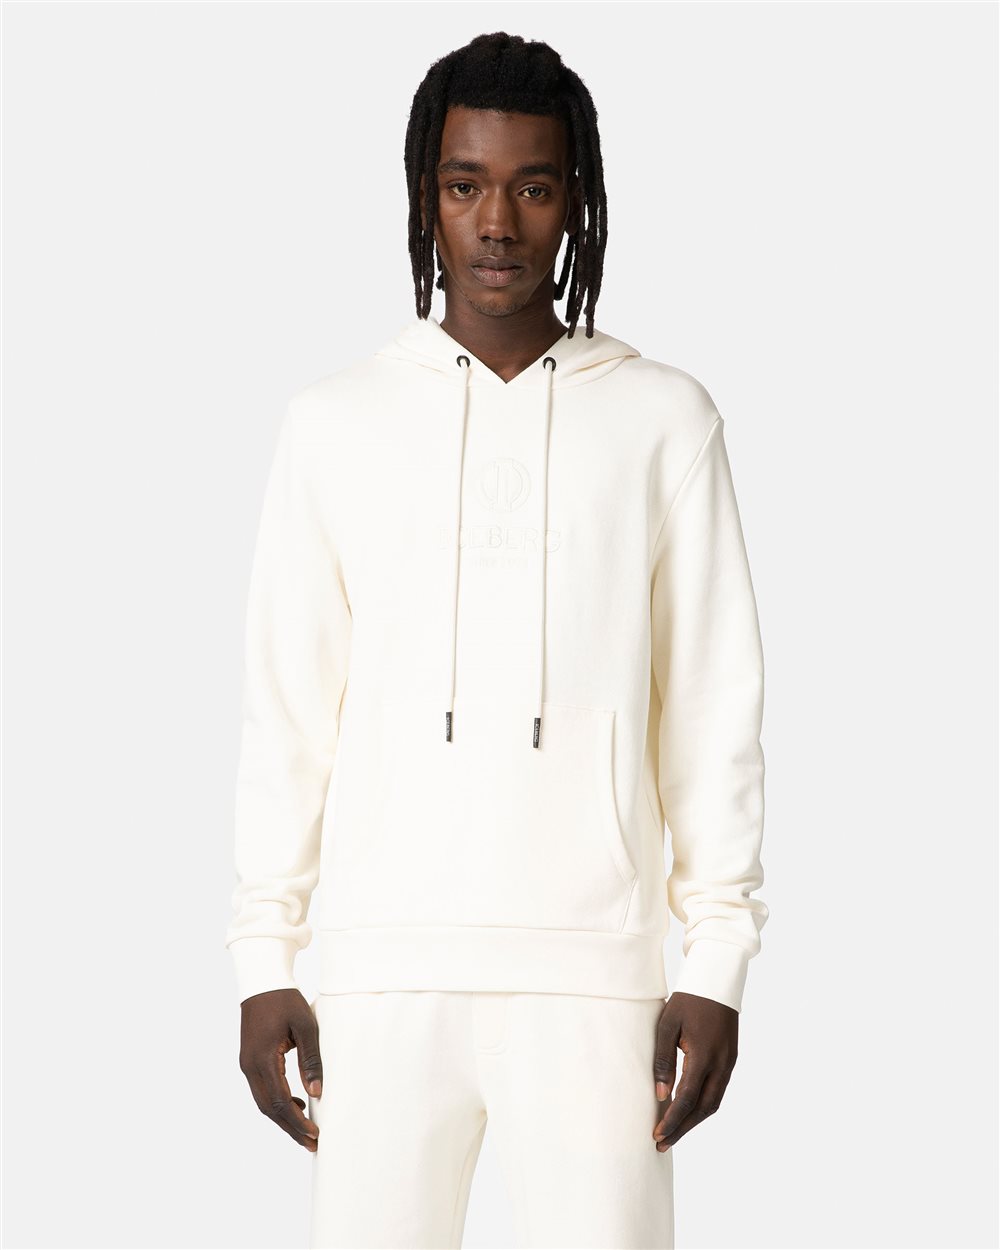 Hooded sweatshirt with logo - Iceberg - Official Website